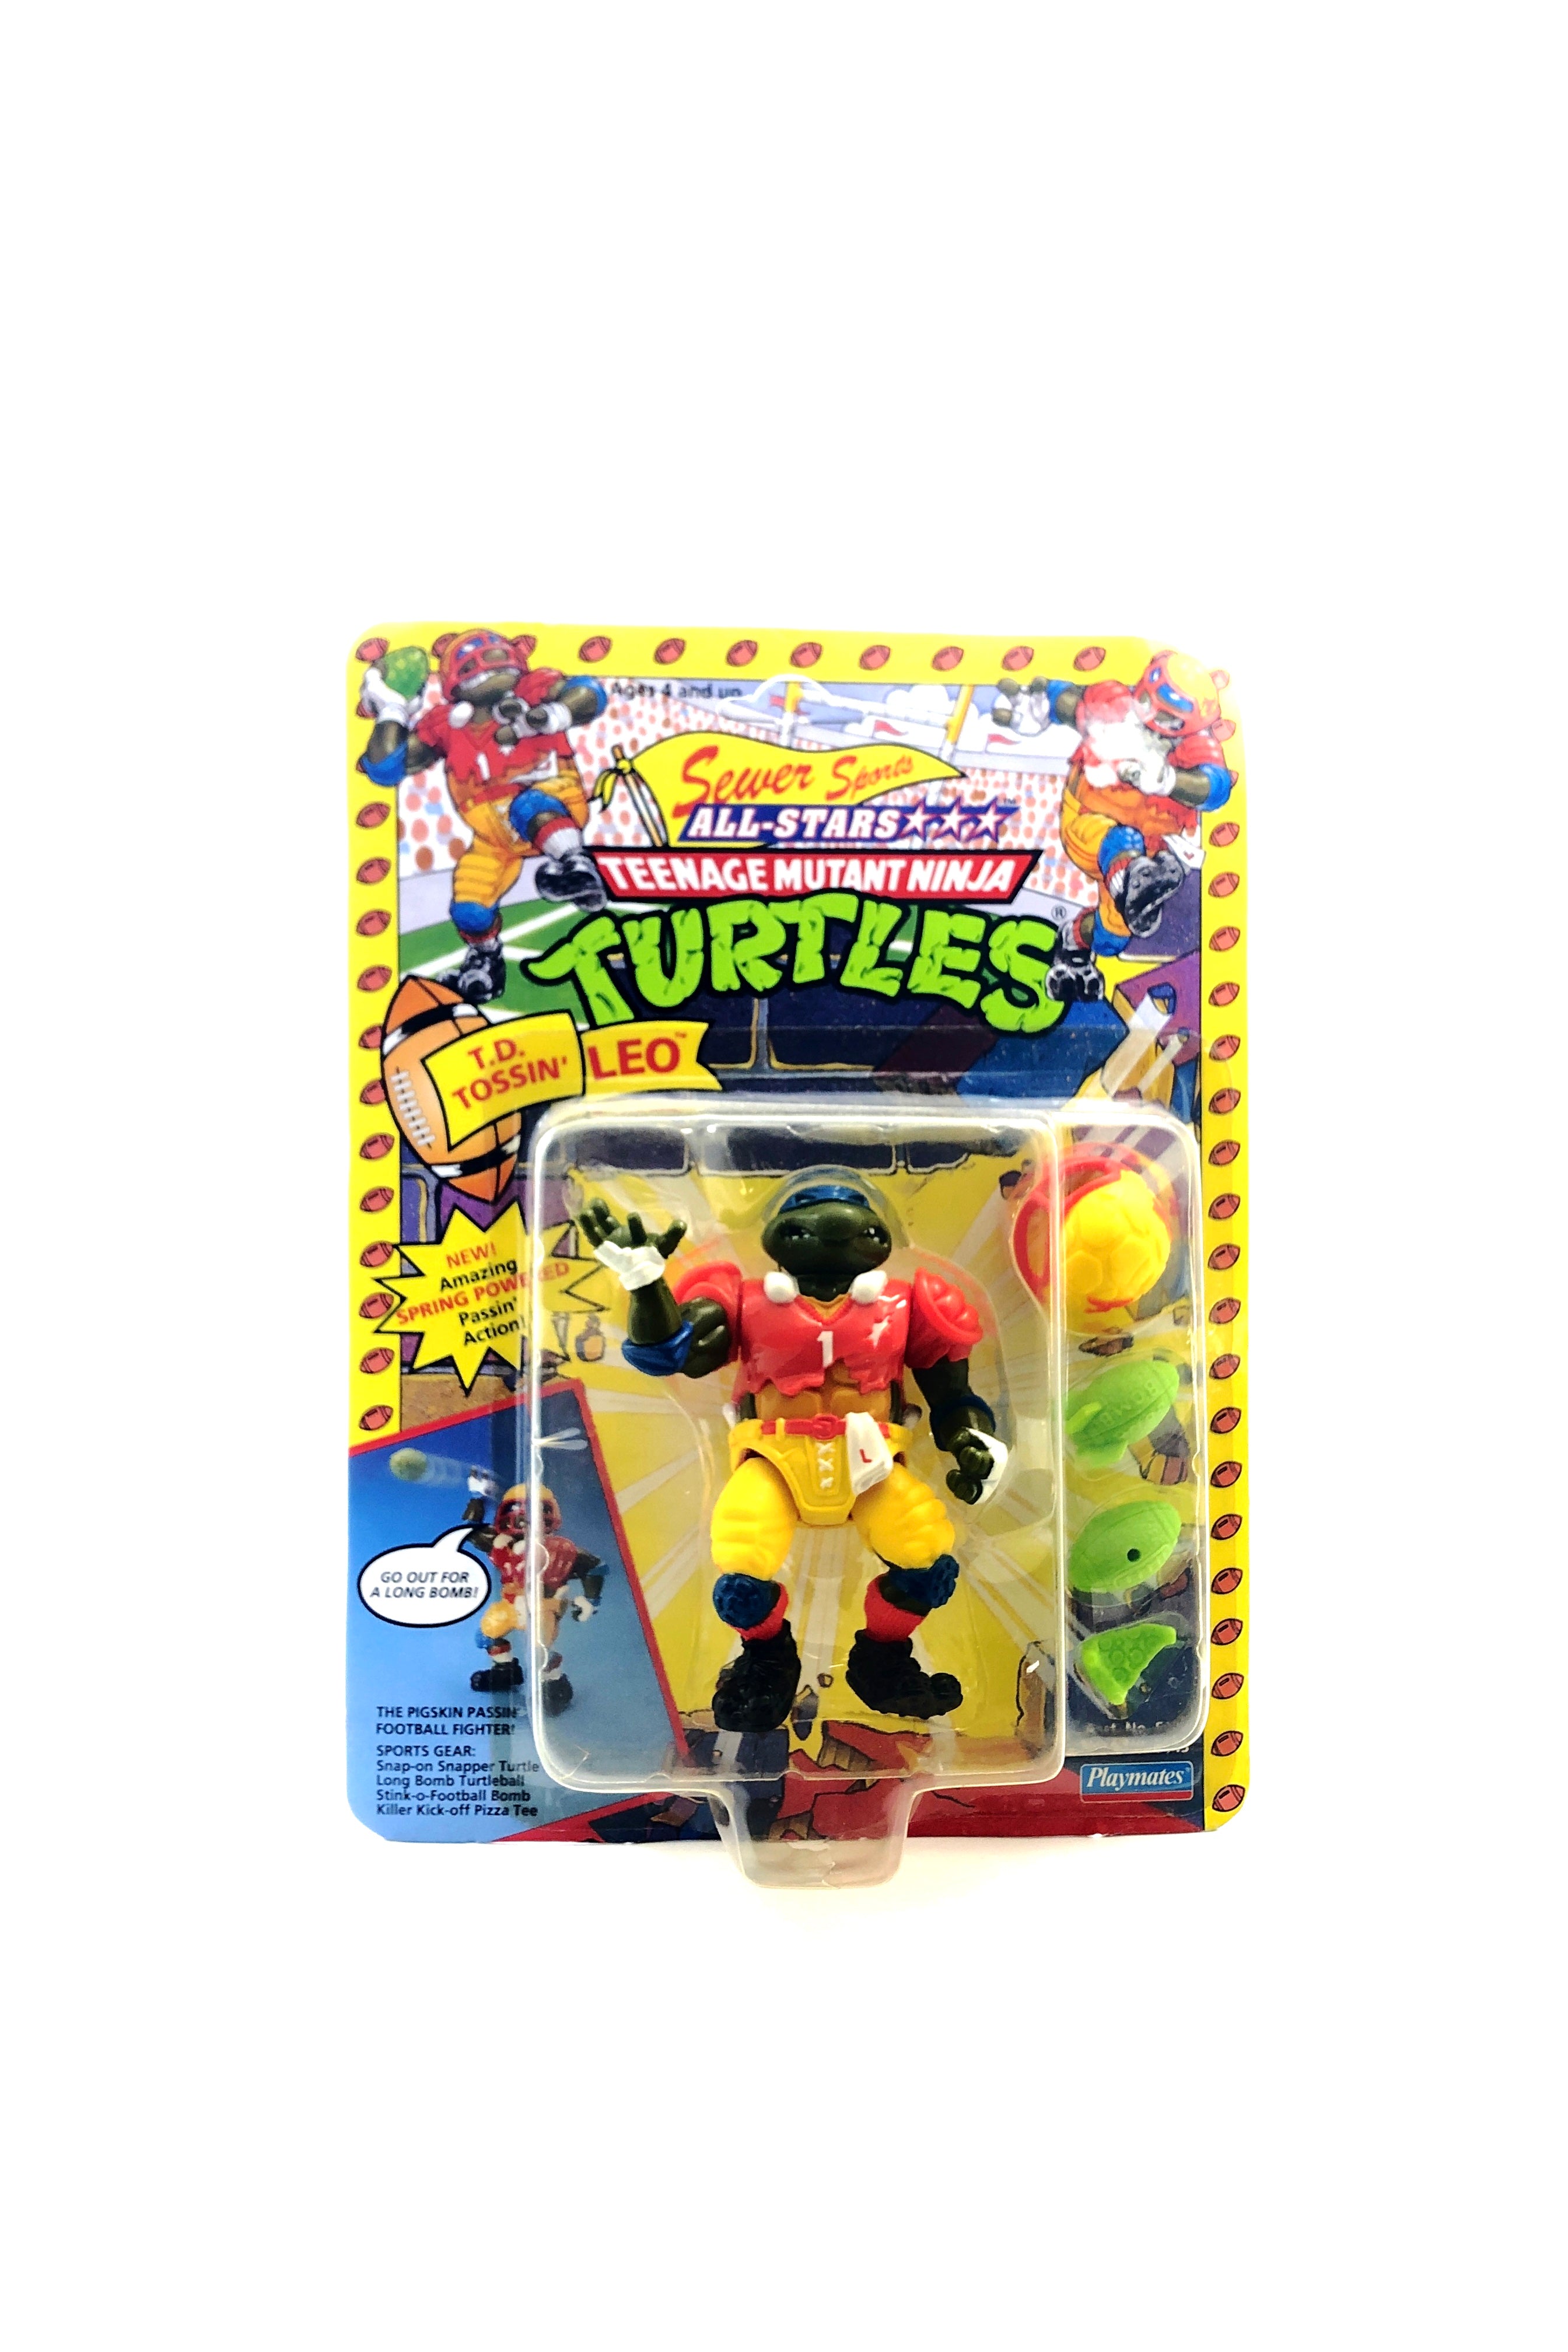 Teenage Mutant Ninja Turtles Sewer Sports All-Stars T.D. Tossin' Leo (Playmates, 1991)-1